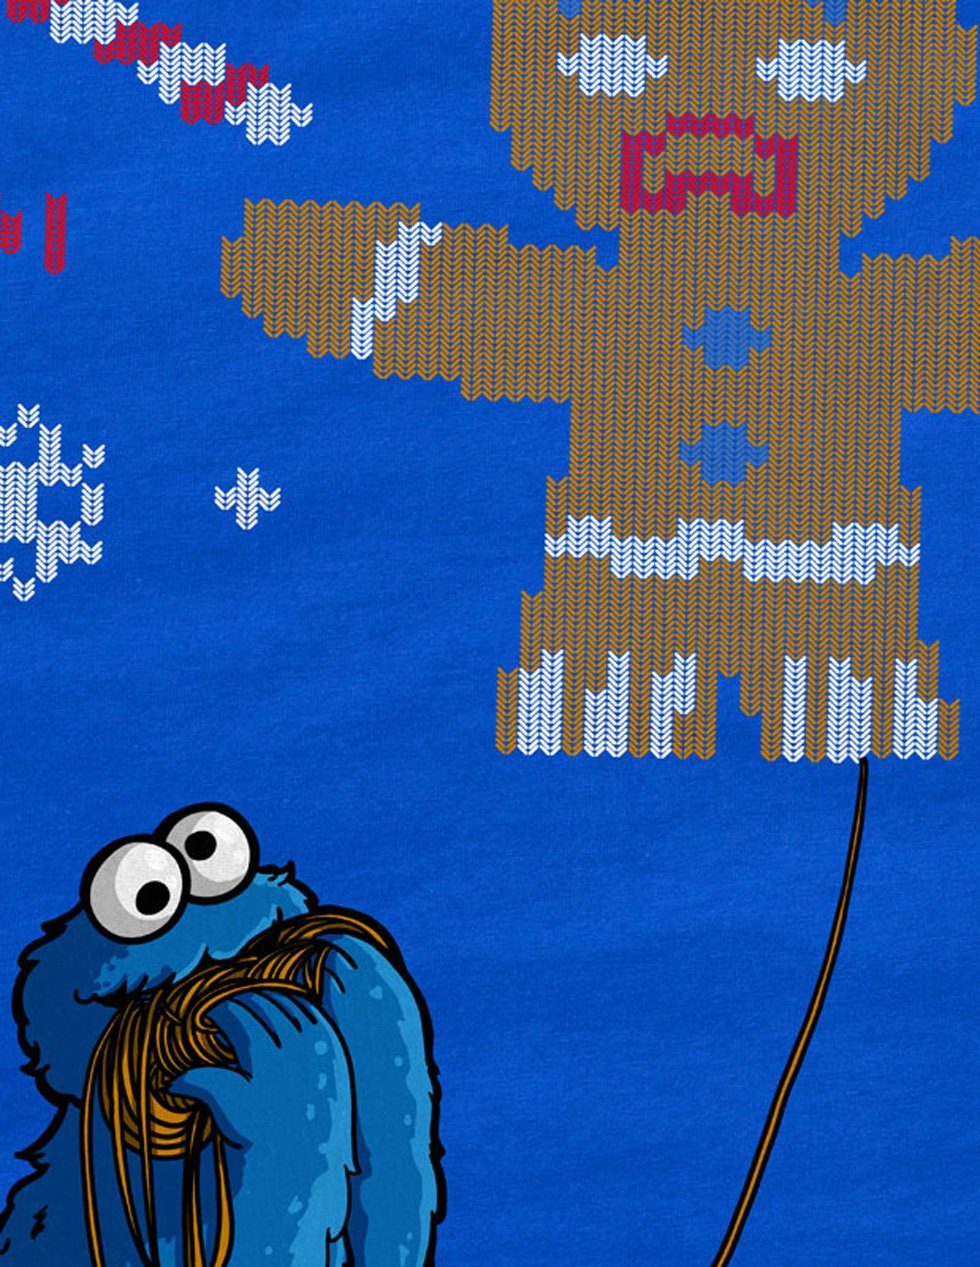 kekse Ugly x-mas Sweater Krümelmonster ernie bert style3 cookie blau Herren fun monster Print-Shirt T-Shirt pulli